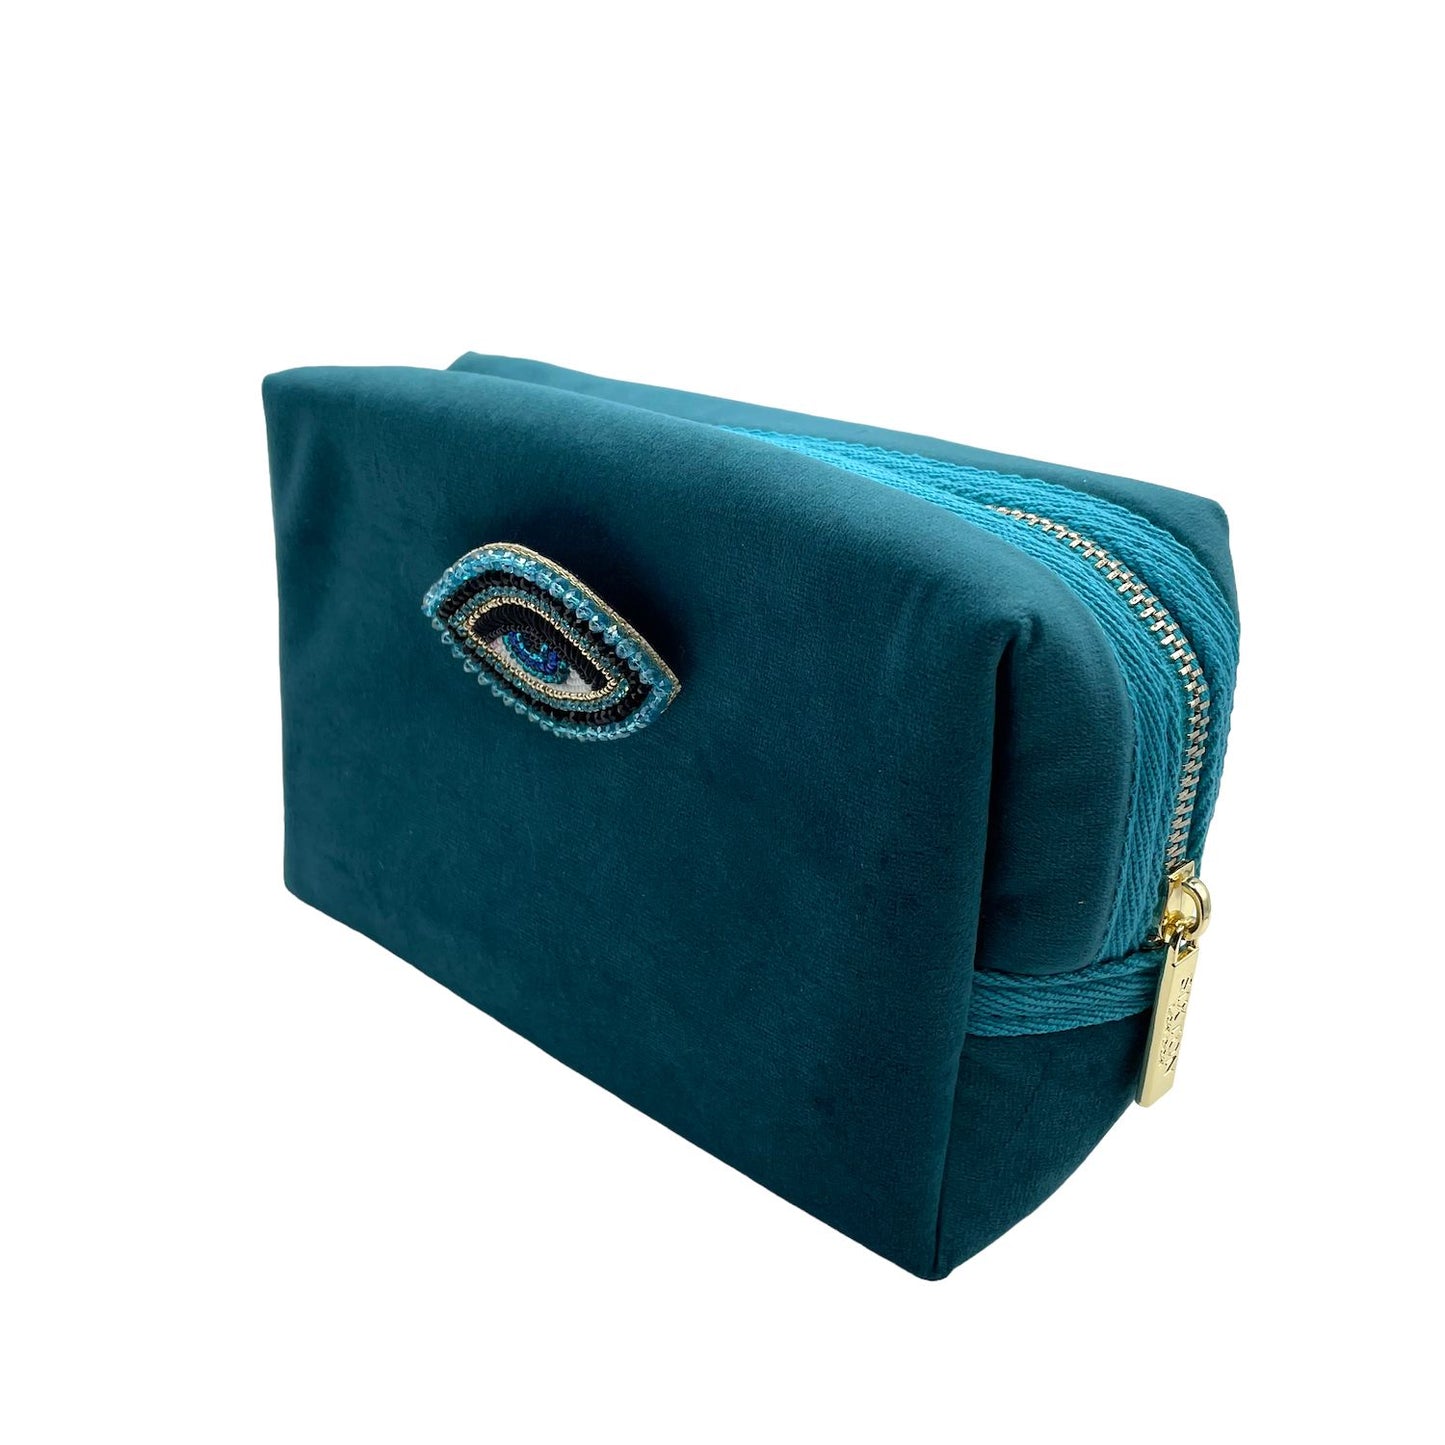 Teal make-up bag & turquoise eye pin - recycled velvet